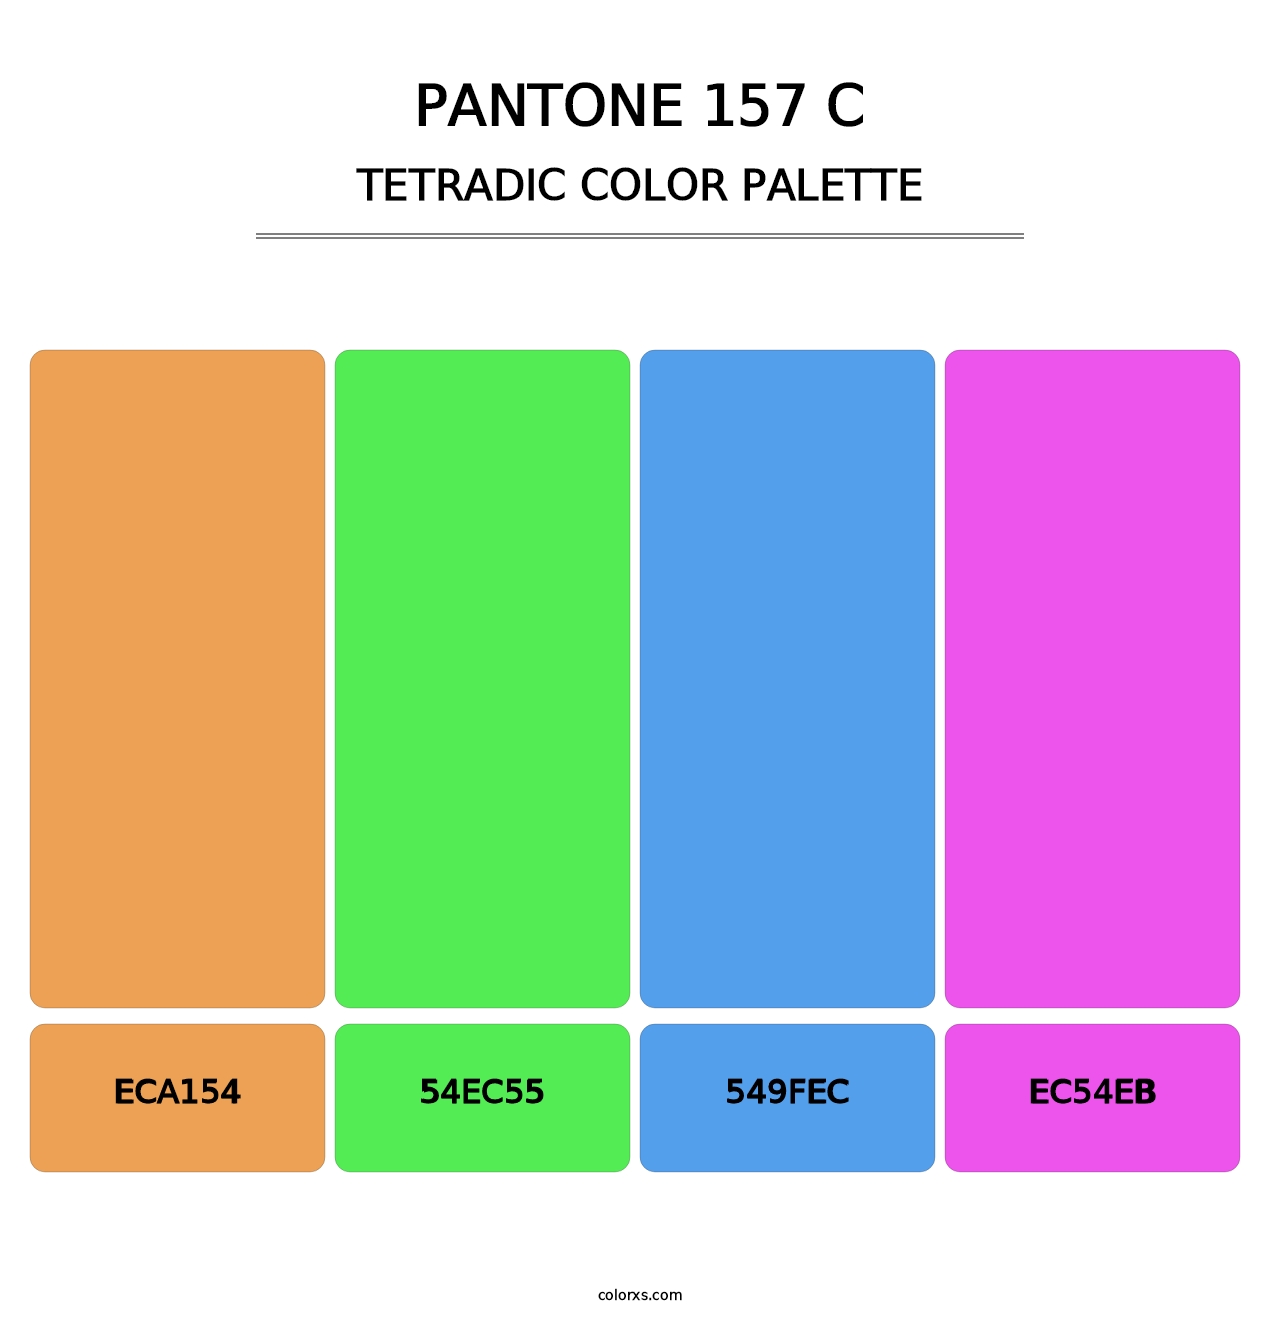 PANTONE 157 C - Tetradic Color Palette